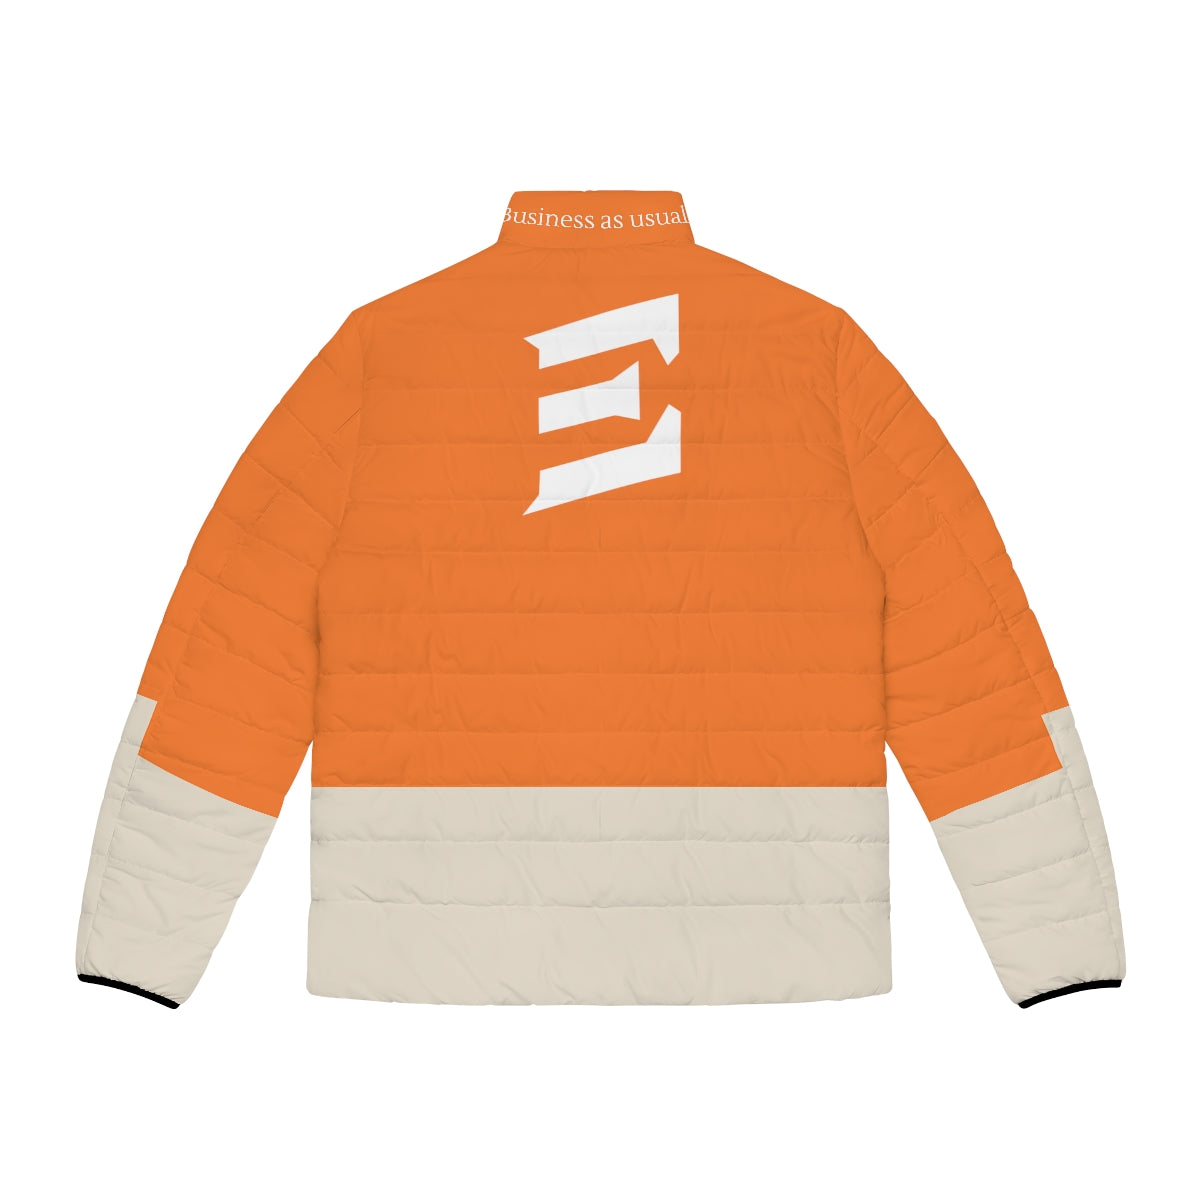 Entrepreneur Orange Puffer Jacket (Fall Collection)